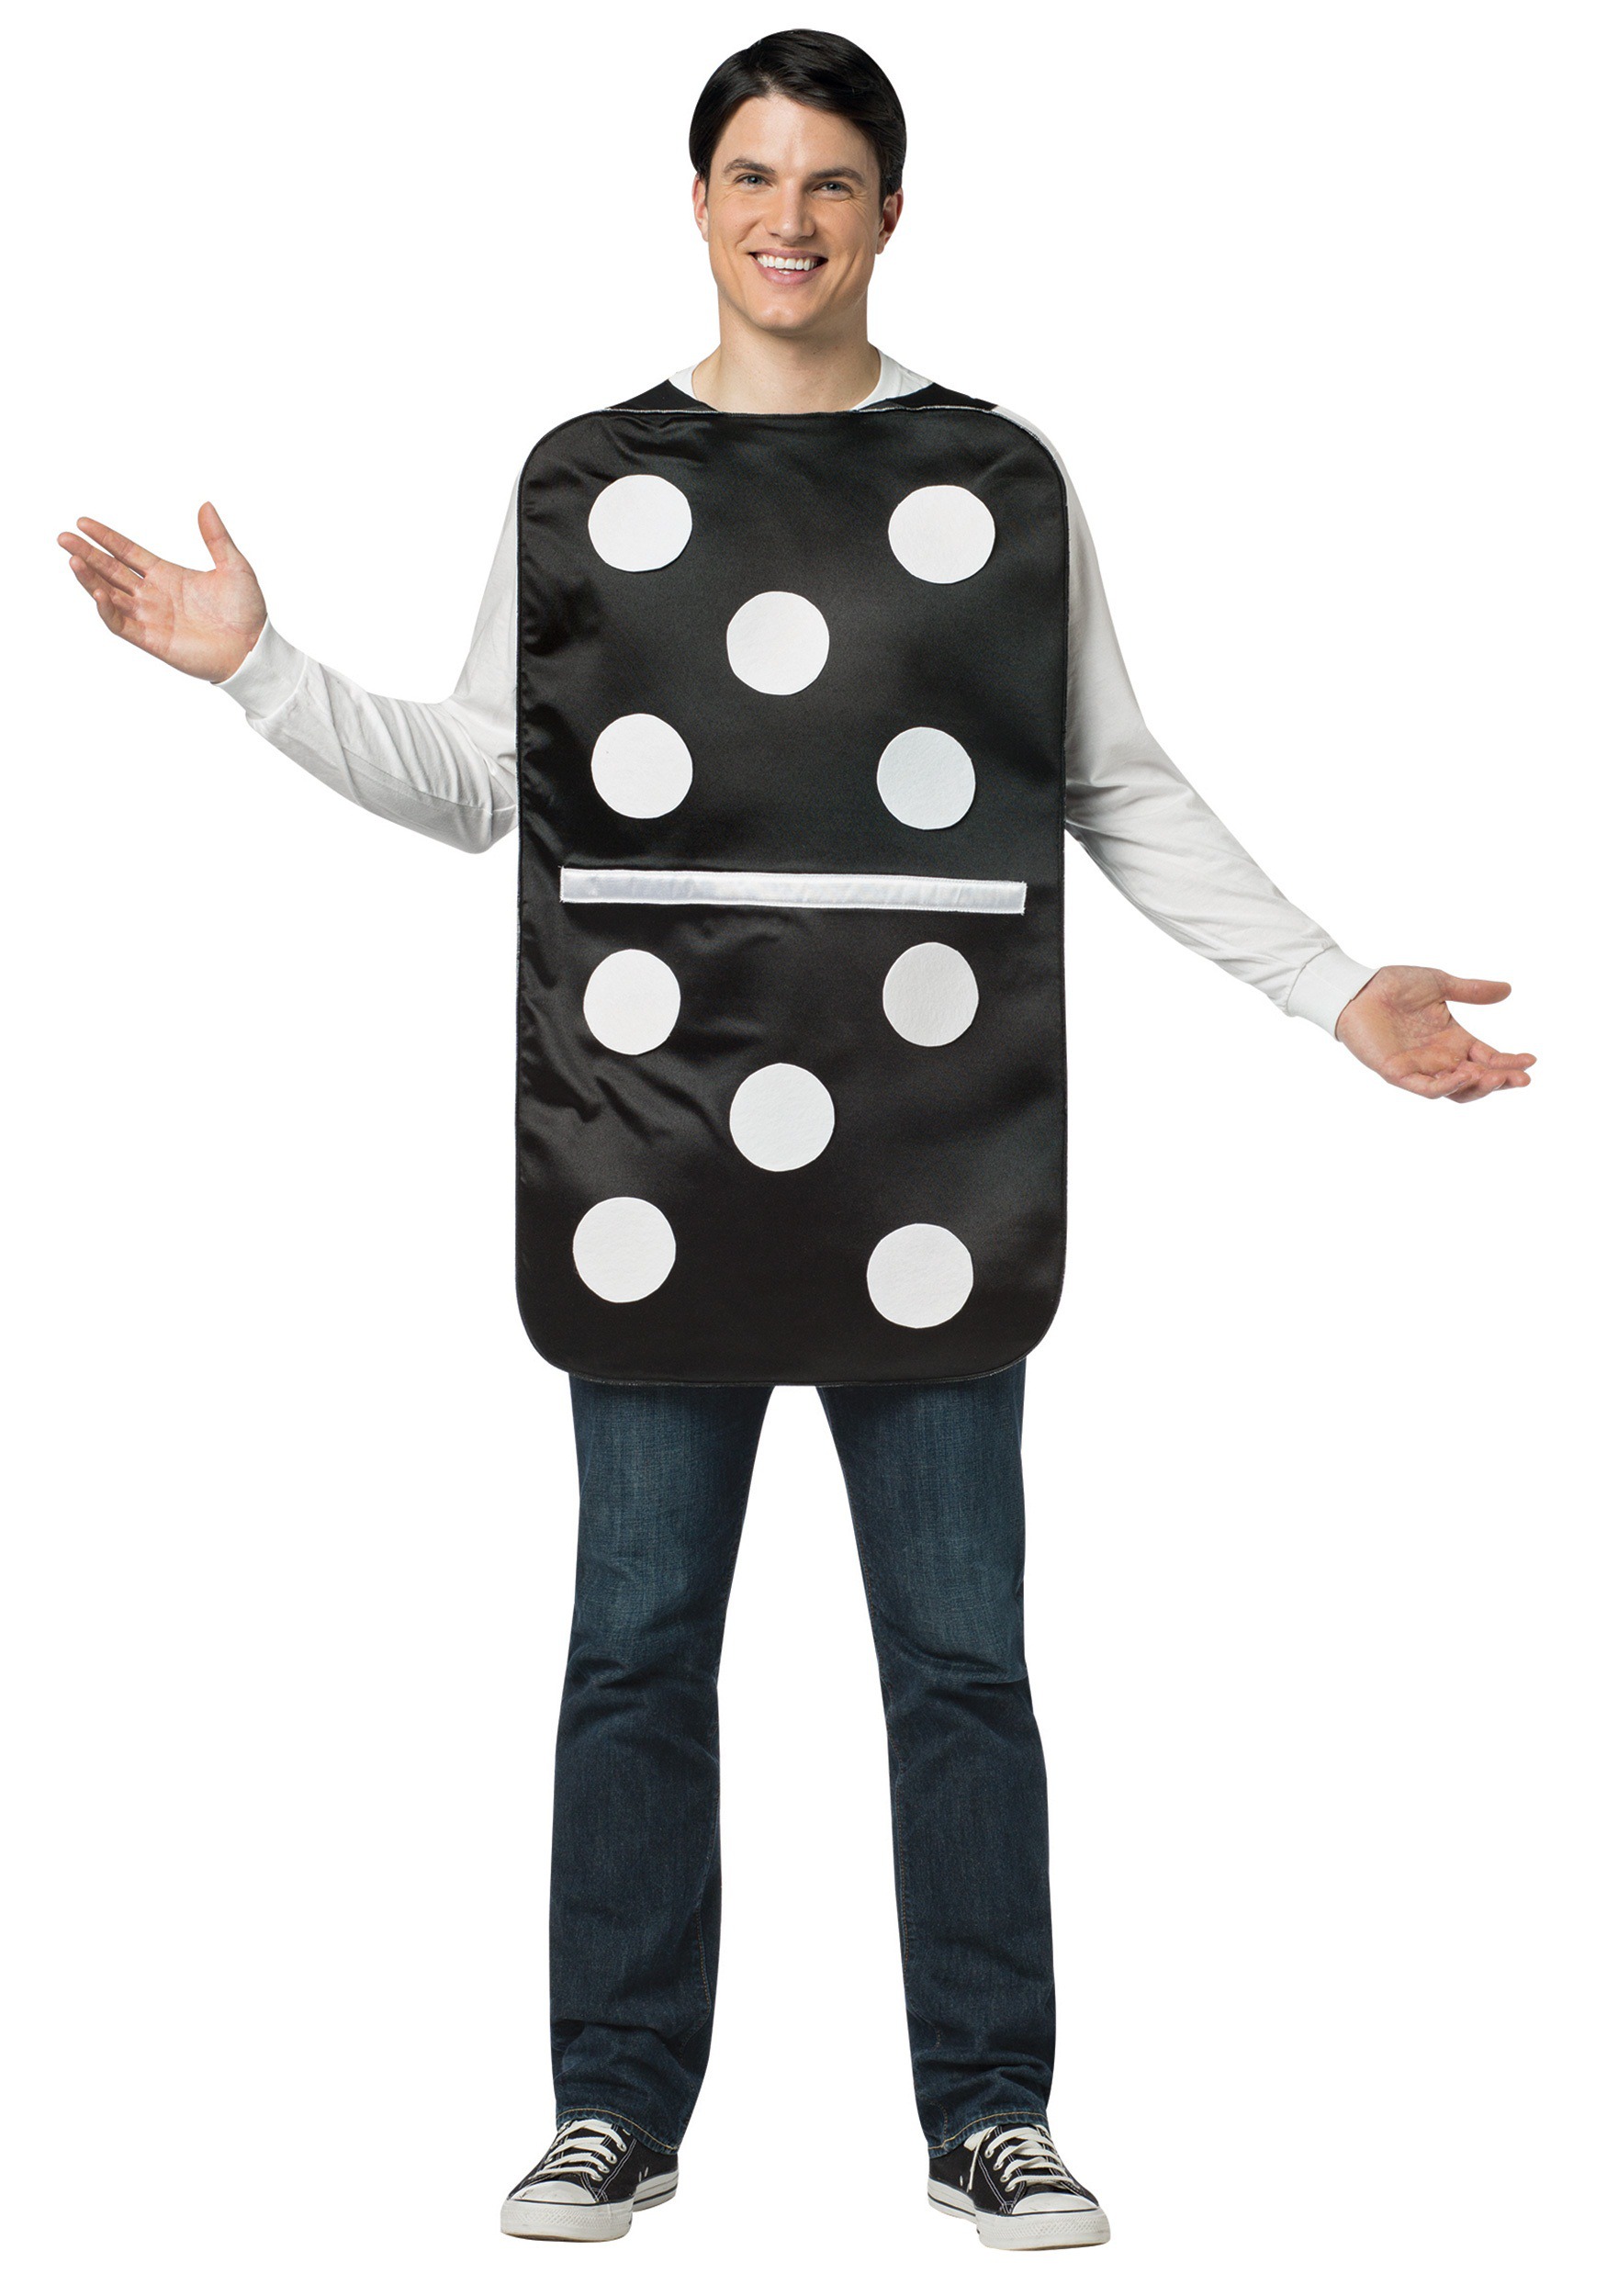 ❤ How to make domino halloween costume